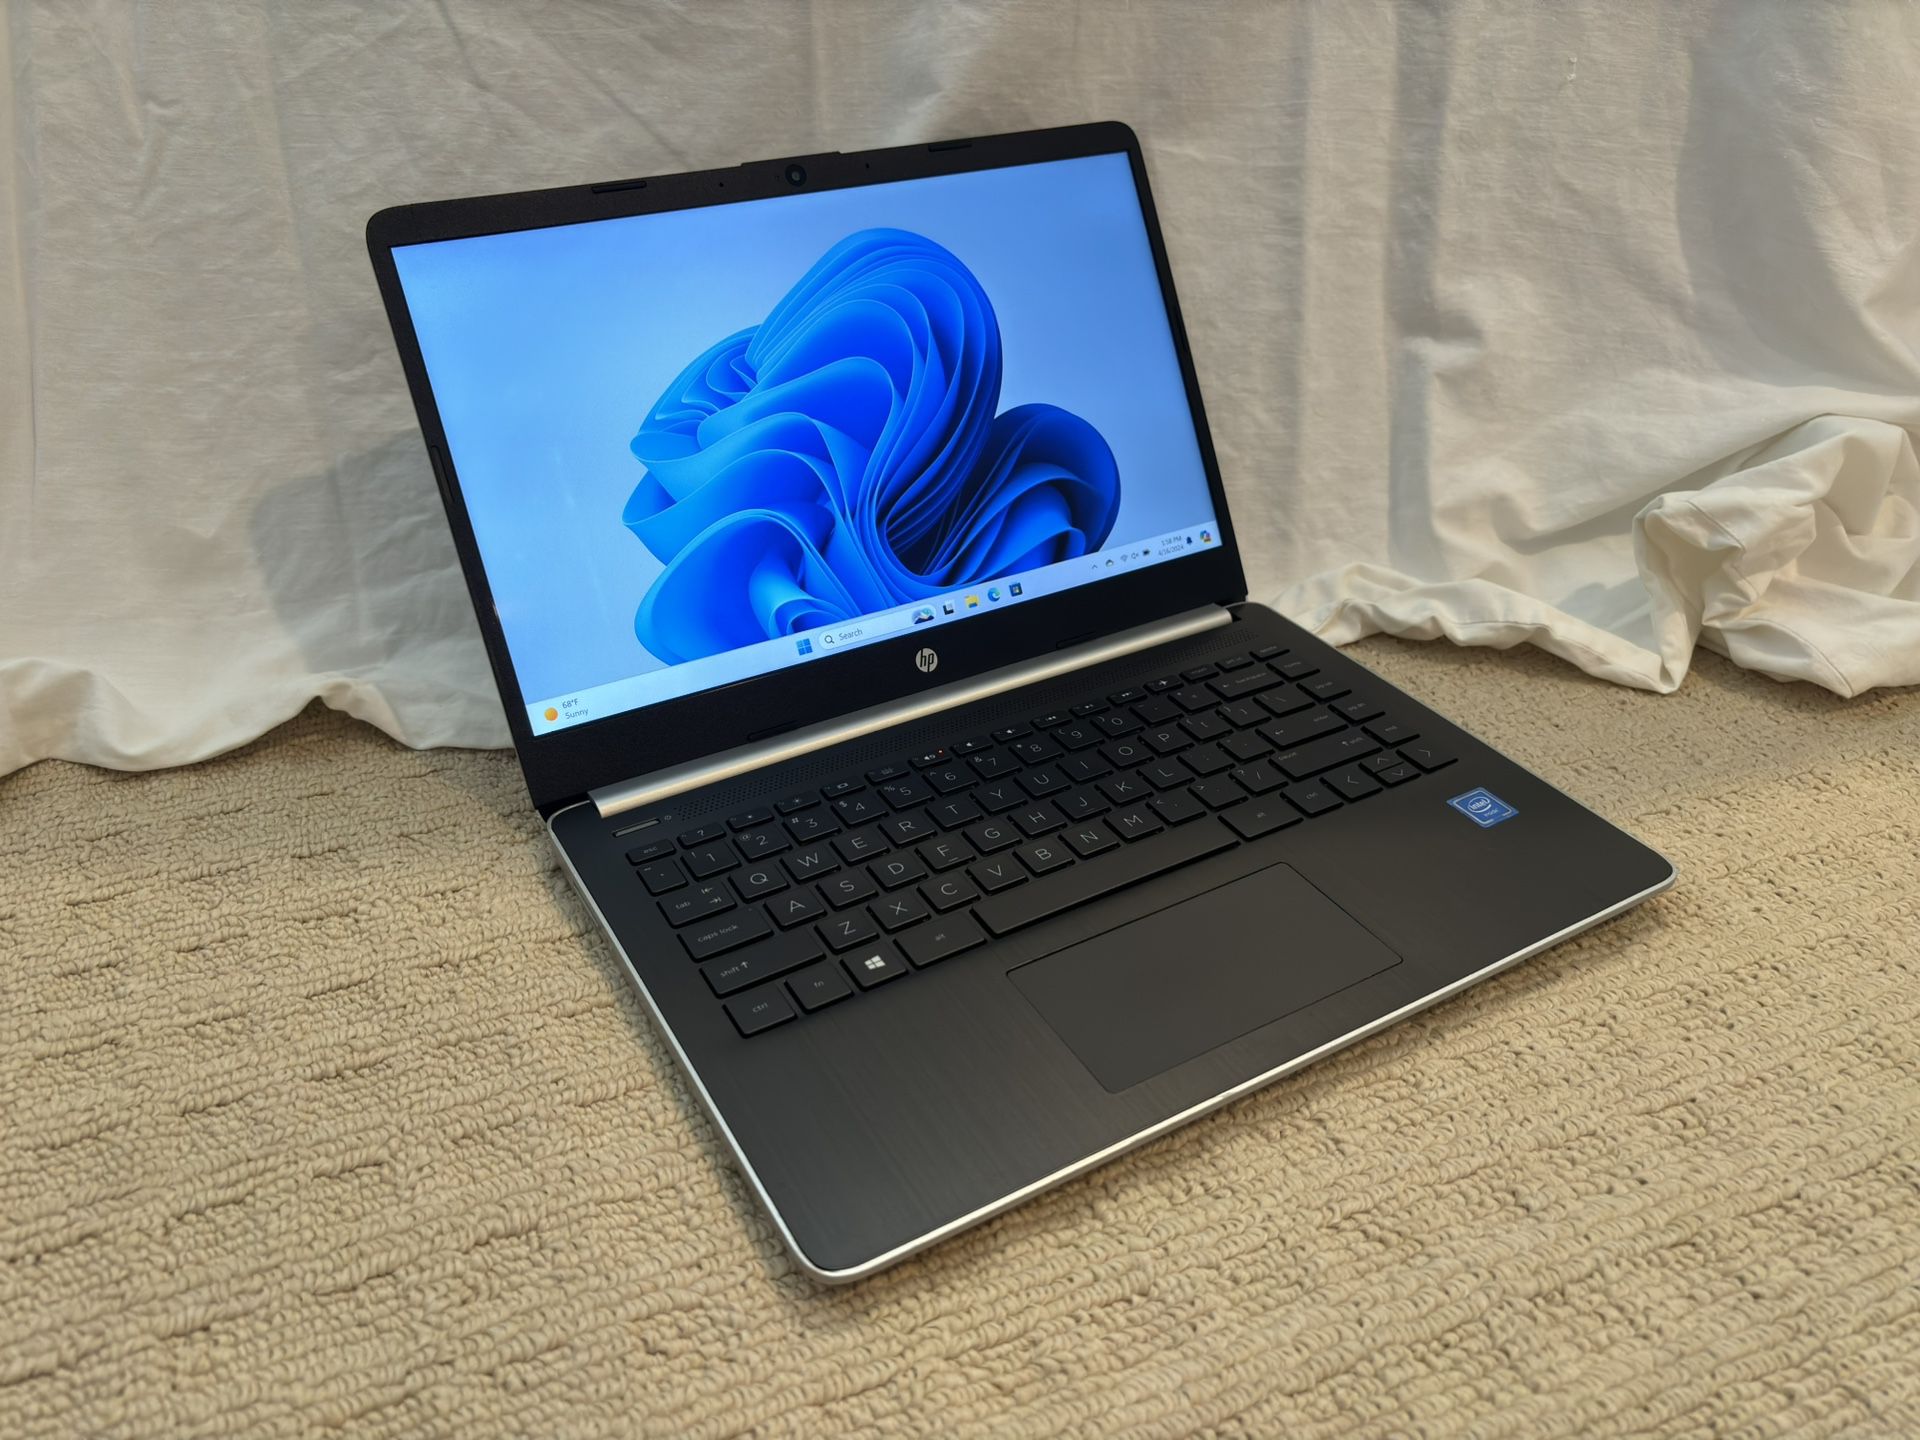 HP Laptop Model 14-dq1033cl, 4 GB RAM, 118 GB SSD, Intel i5